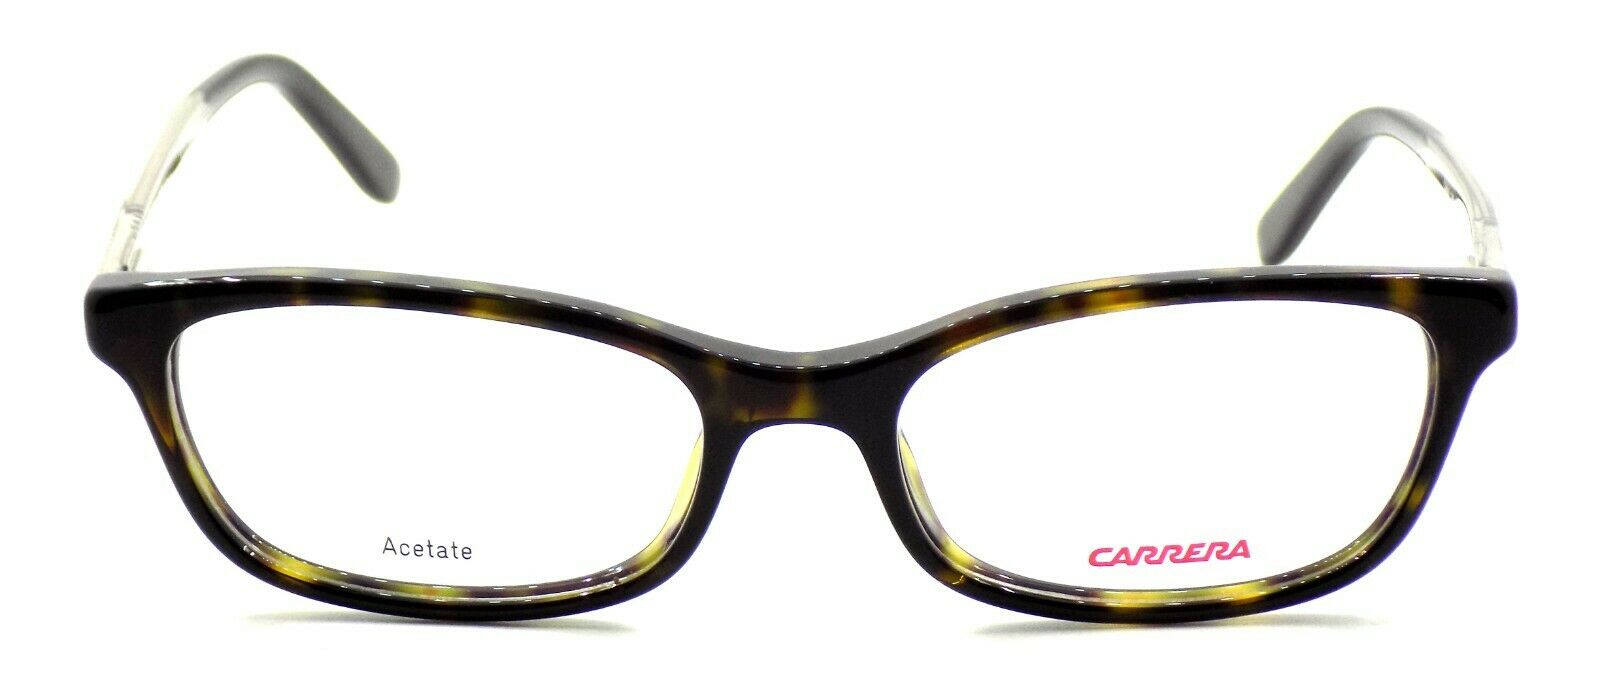 2-Carrera CA6647 QK8 Women's Eyeglasses Frames 50-17-140 Dark Havana + CASE-762753669988-IKSpecs